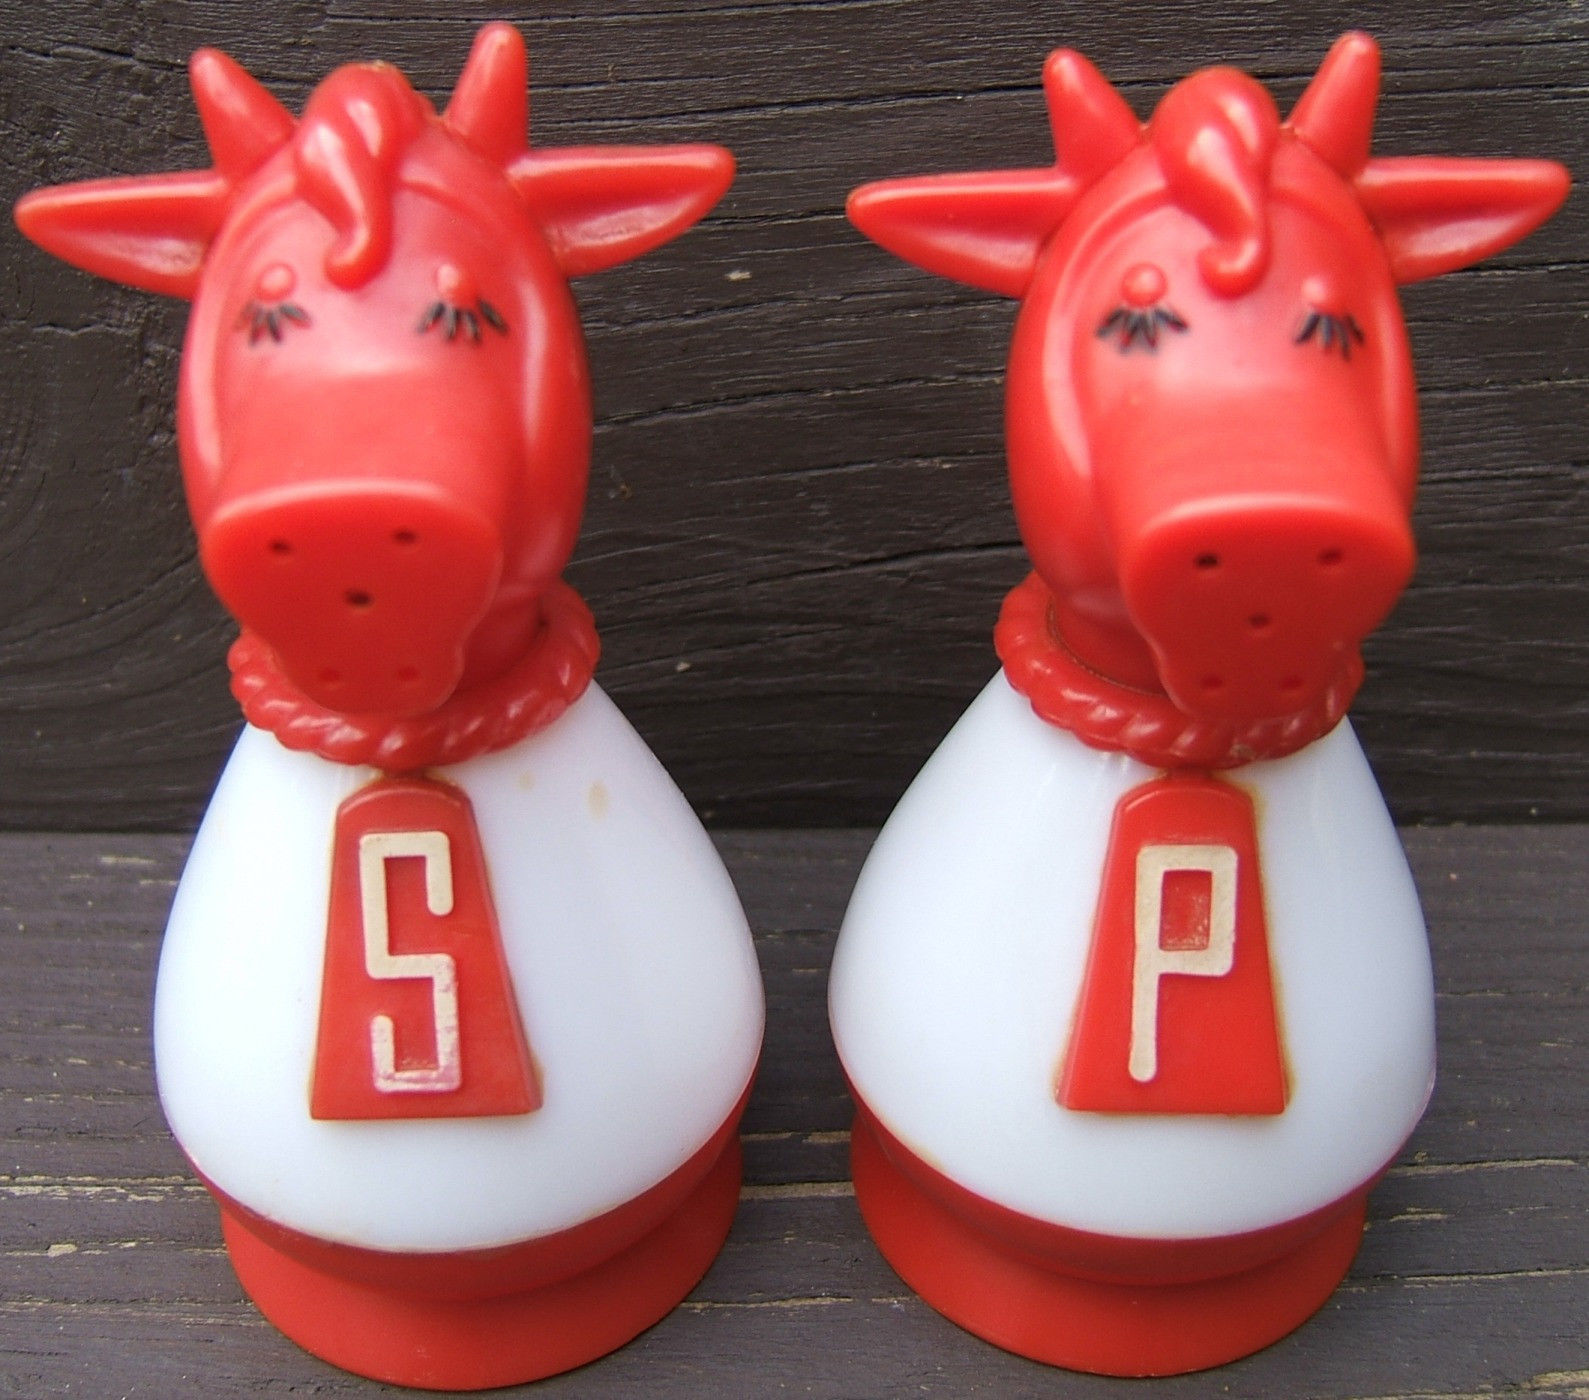 Vintage Cow Bull Plastic Salt Pepper Shaker Set Red and